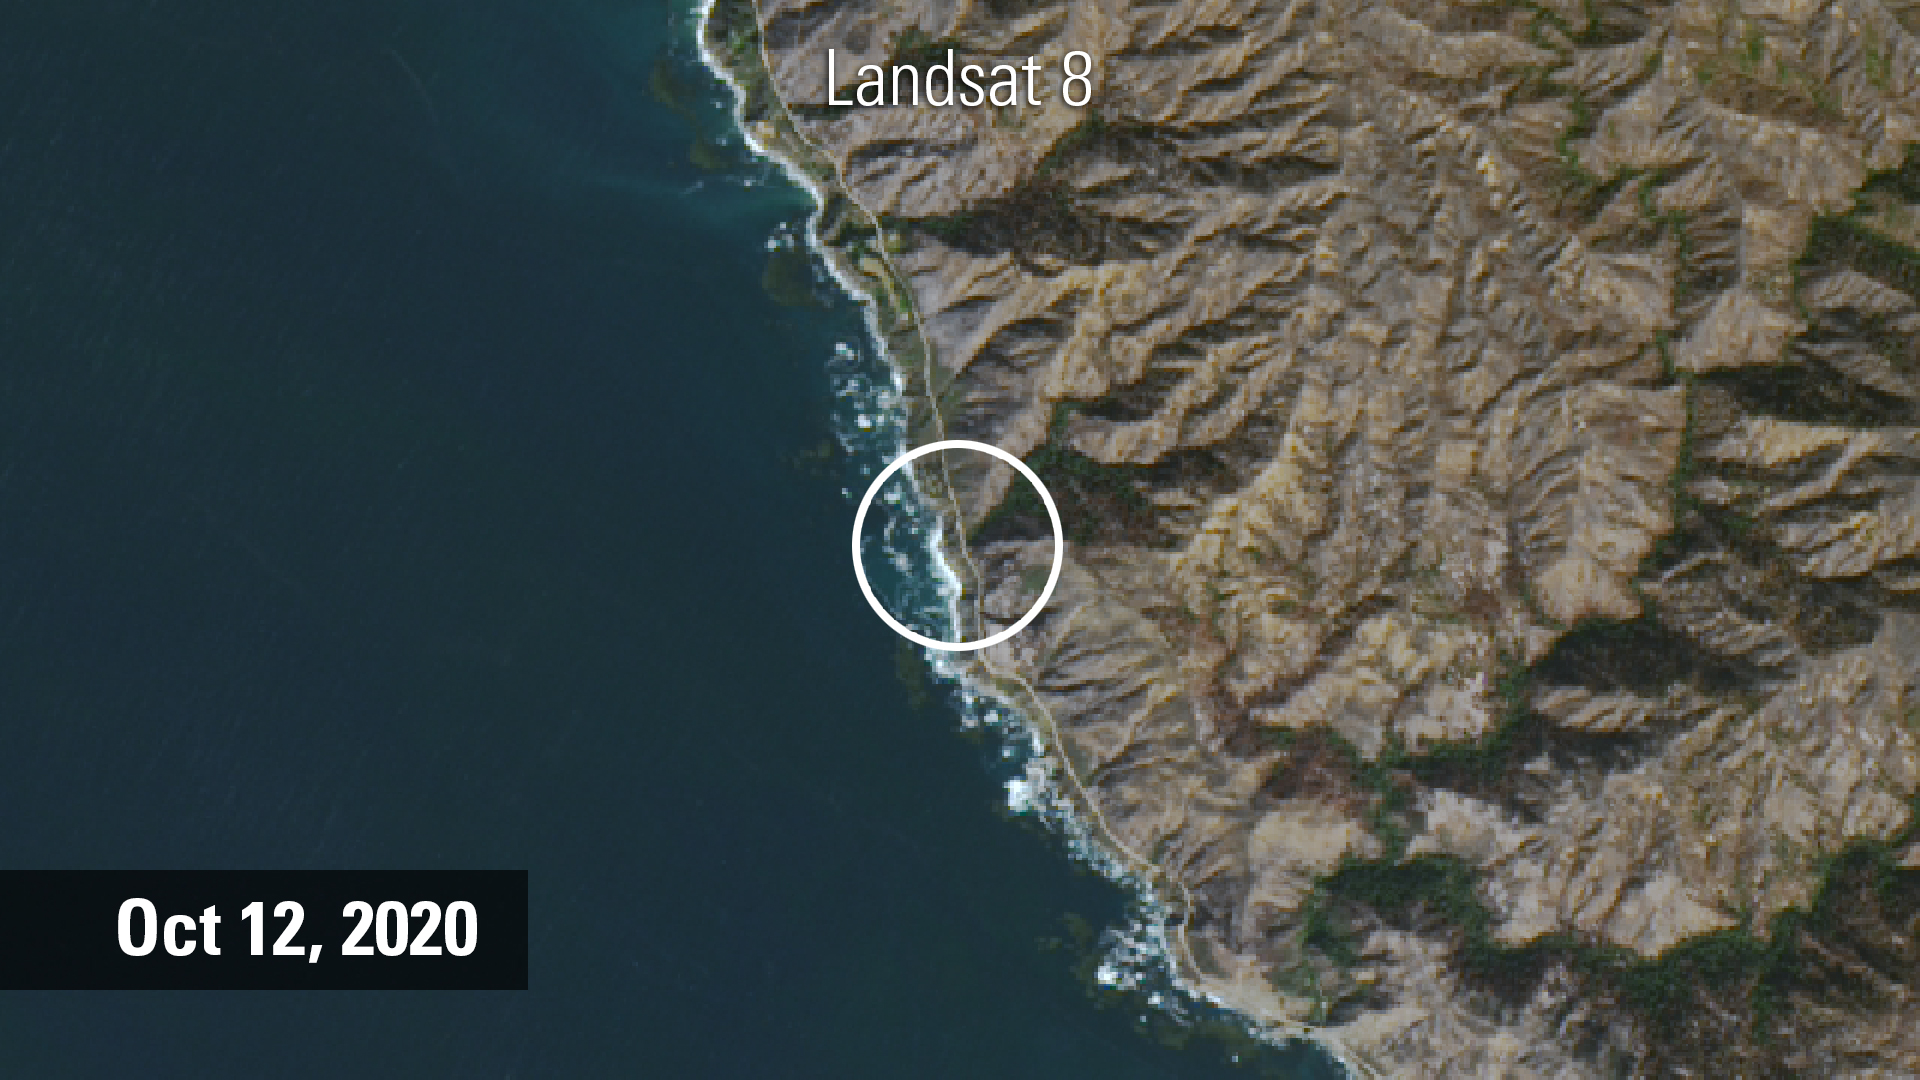 Color satellite image of Big Sur, CA in October 2020